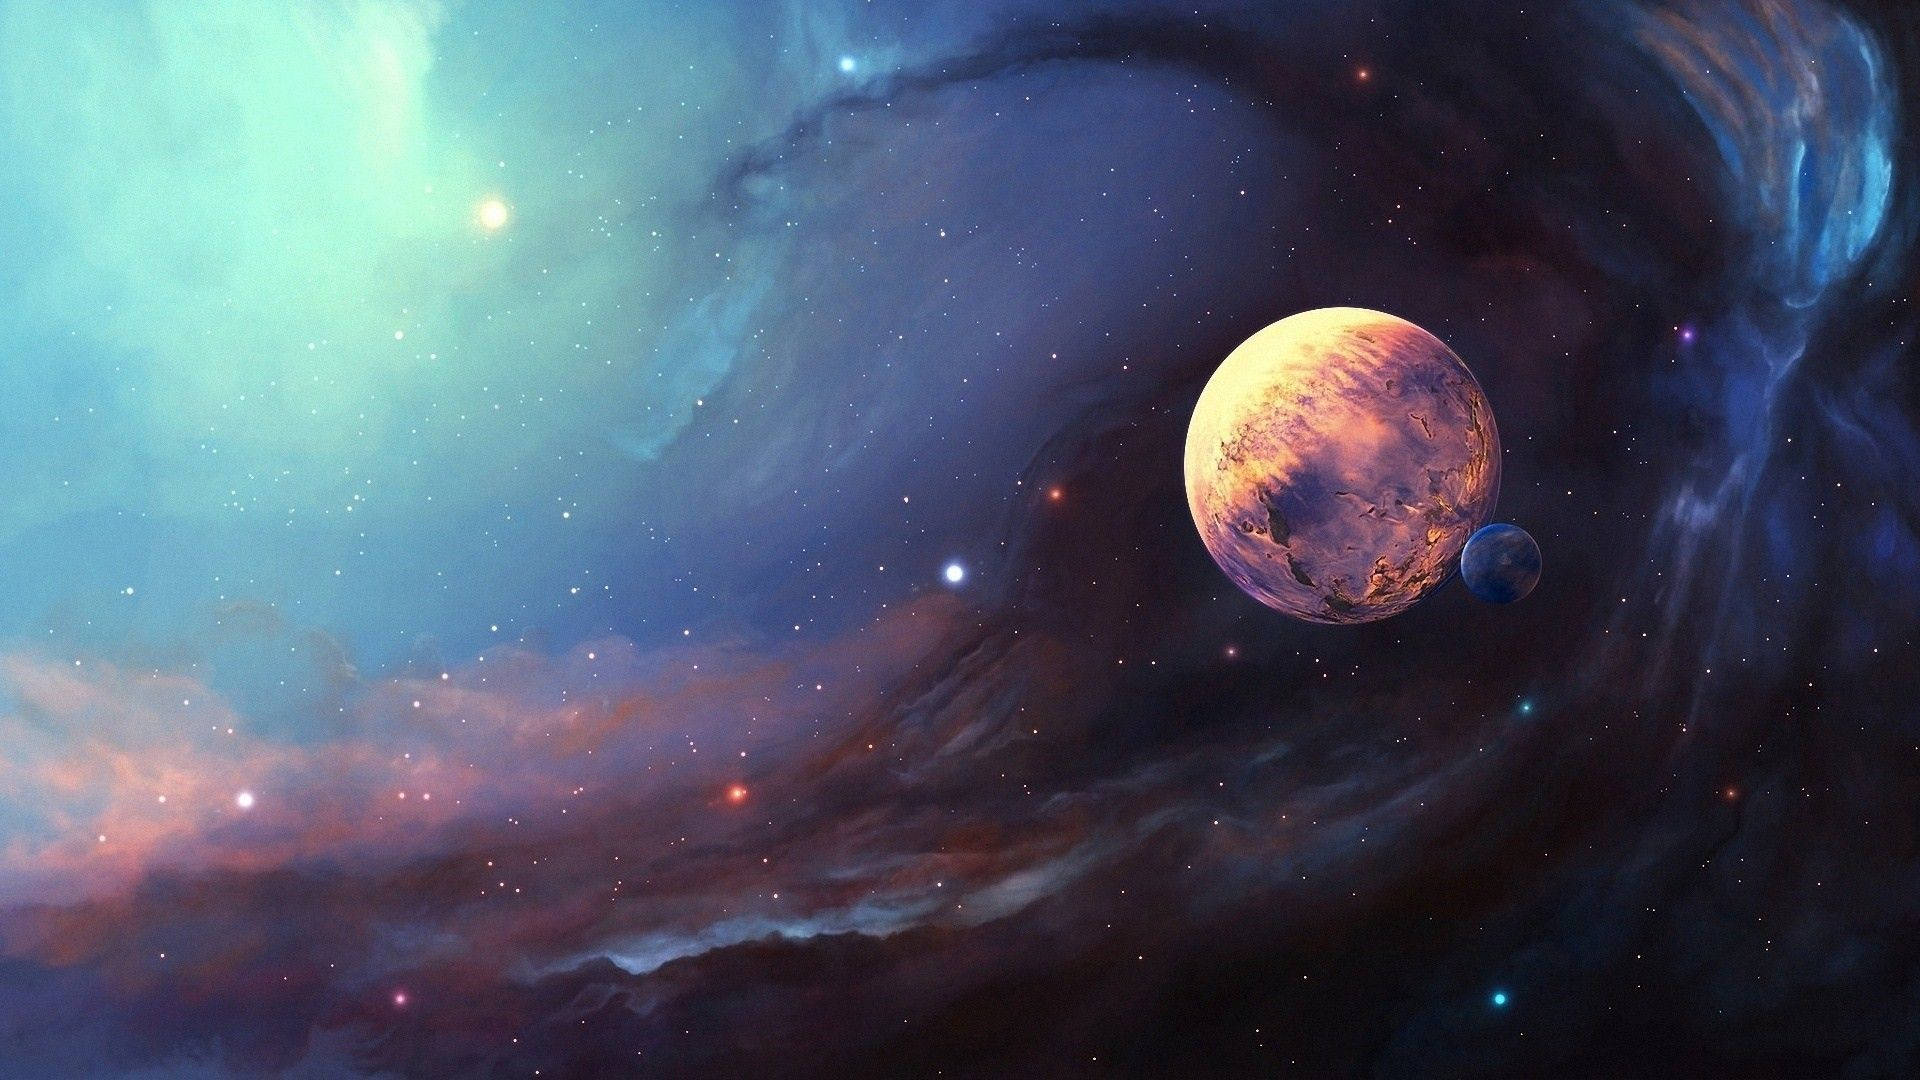 Cosmic Jupiter Digital Art Background